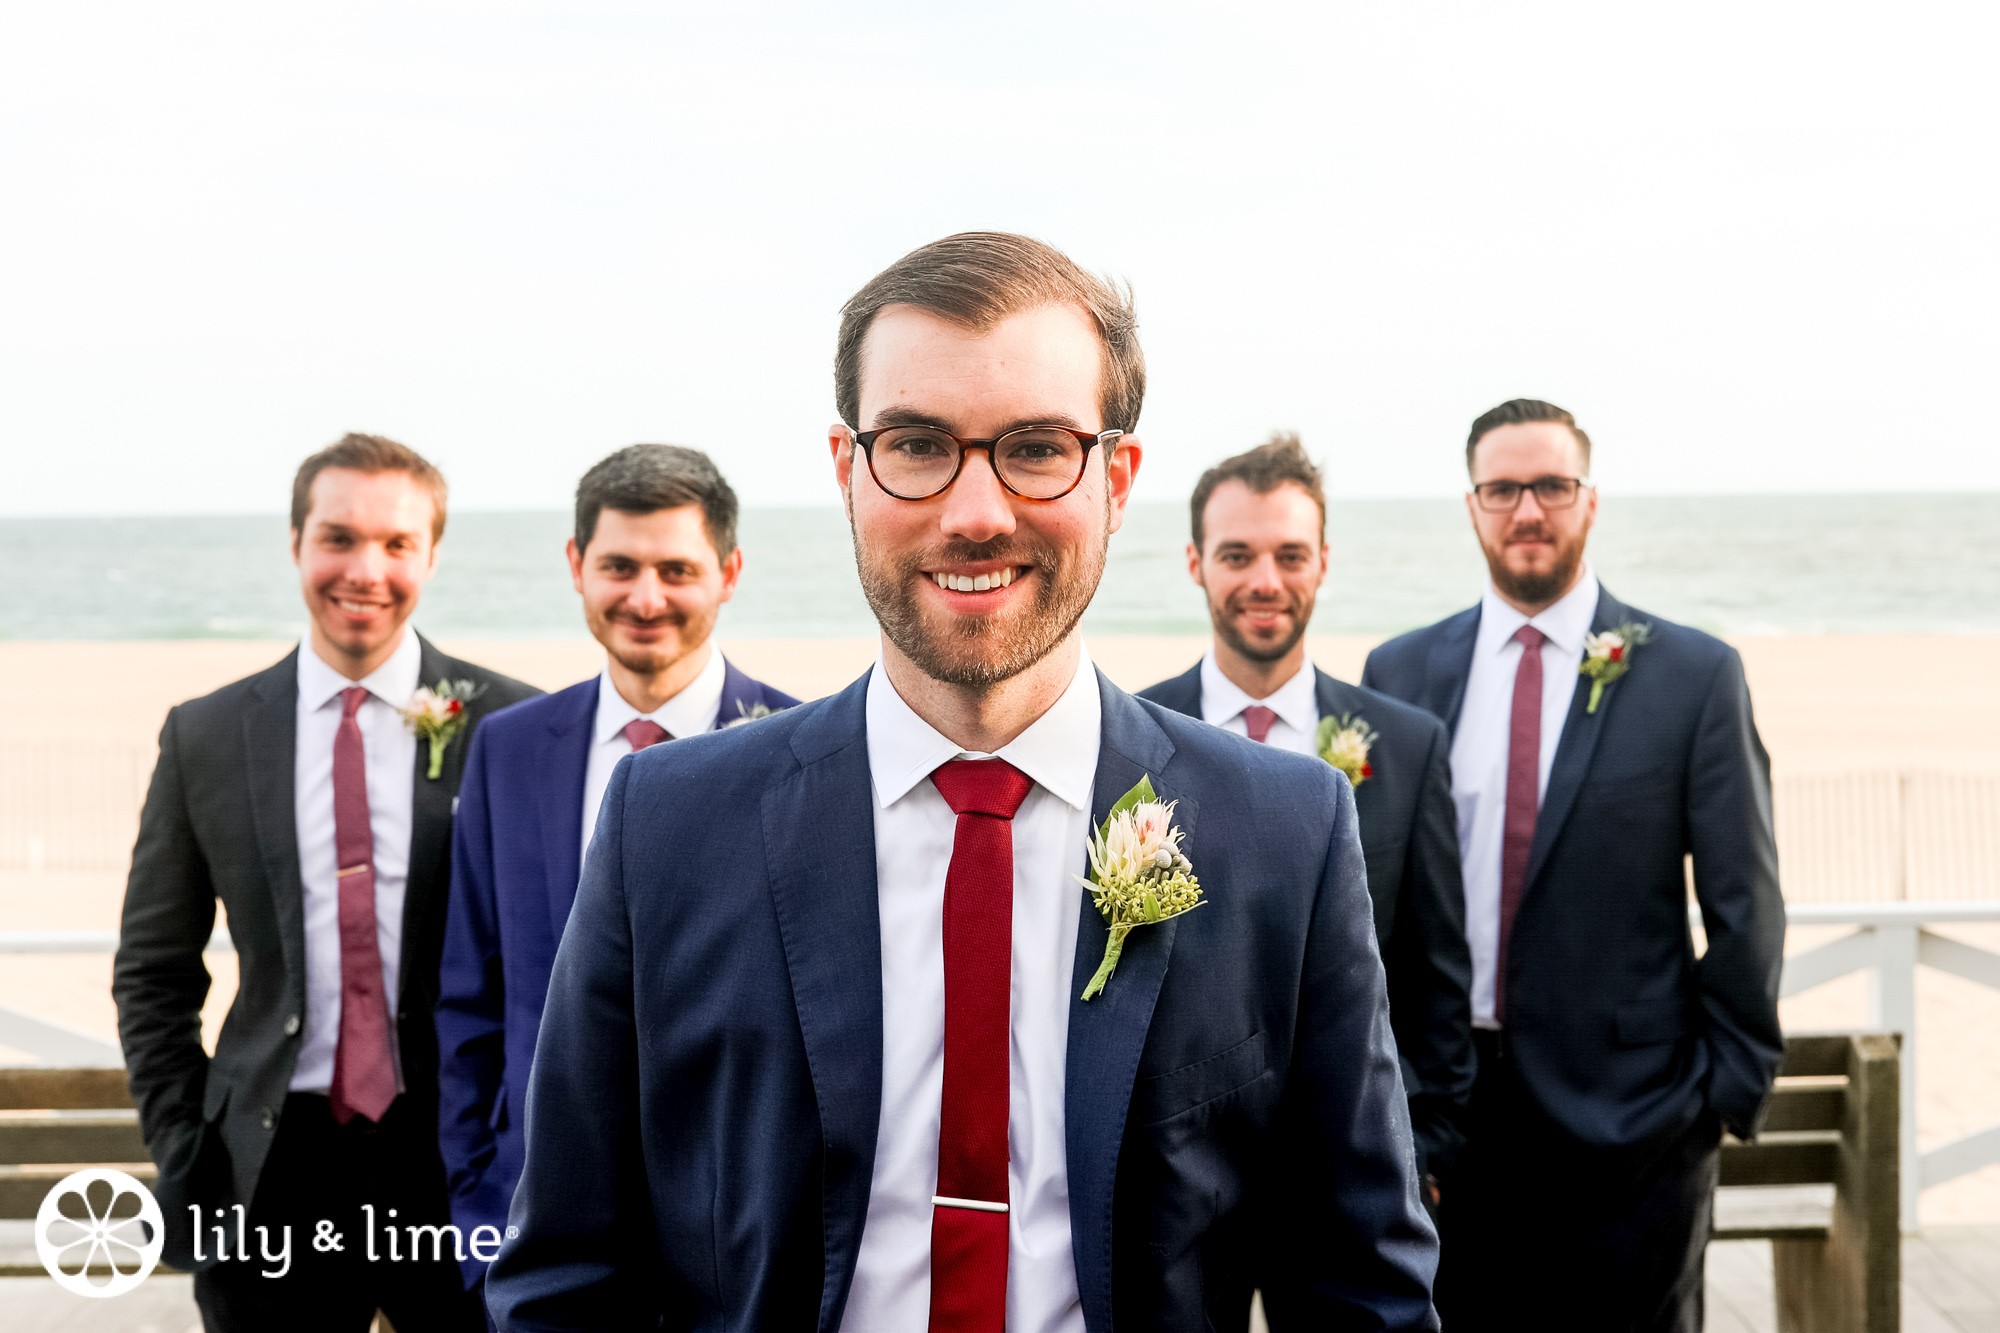 Dashing Fall Wedding Attire for Men | Lily & Lime